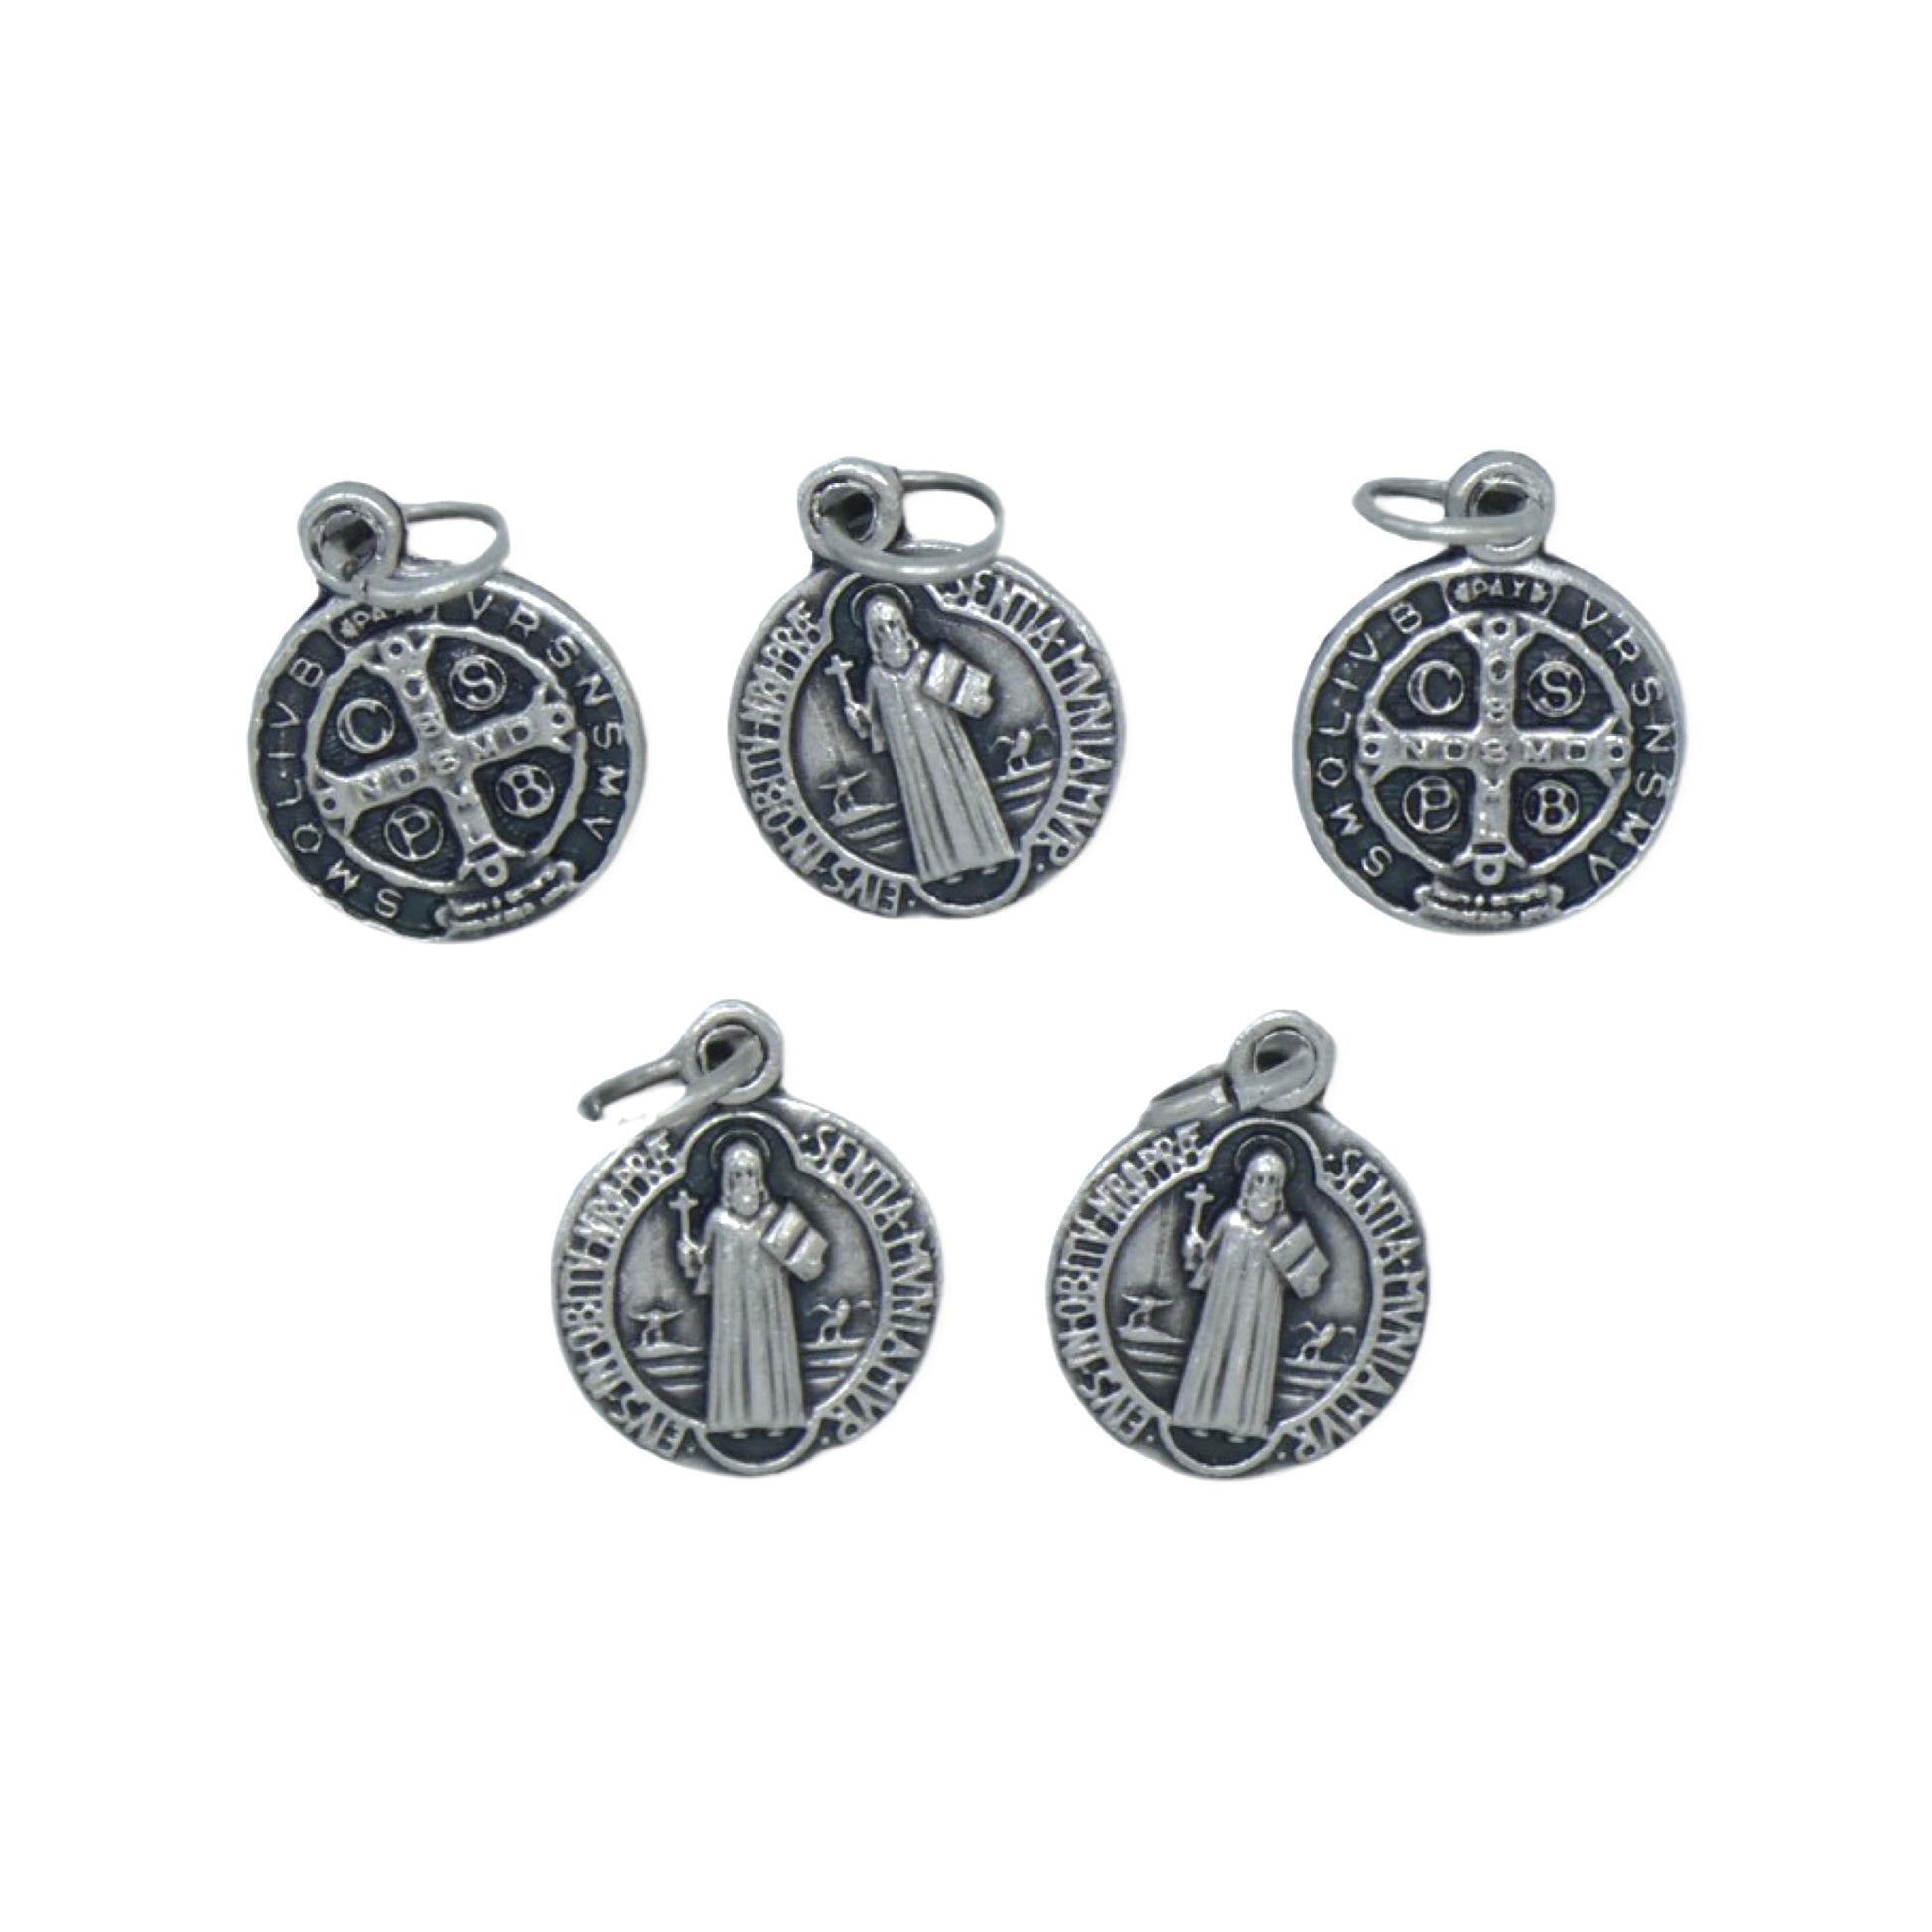 Set of 5 St. Benedict Medals – Triumph of Love